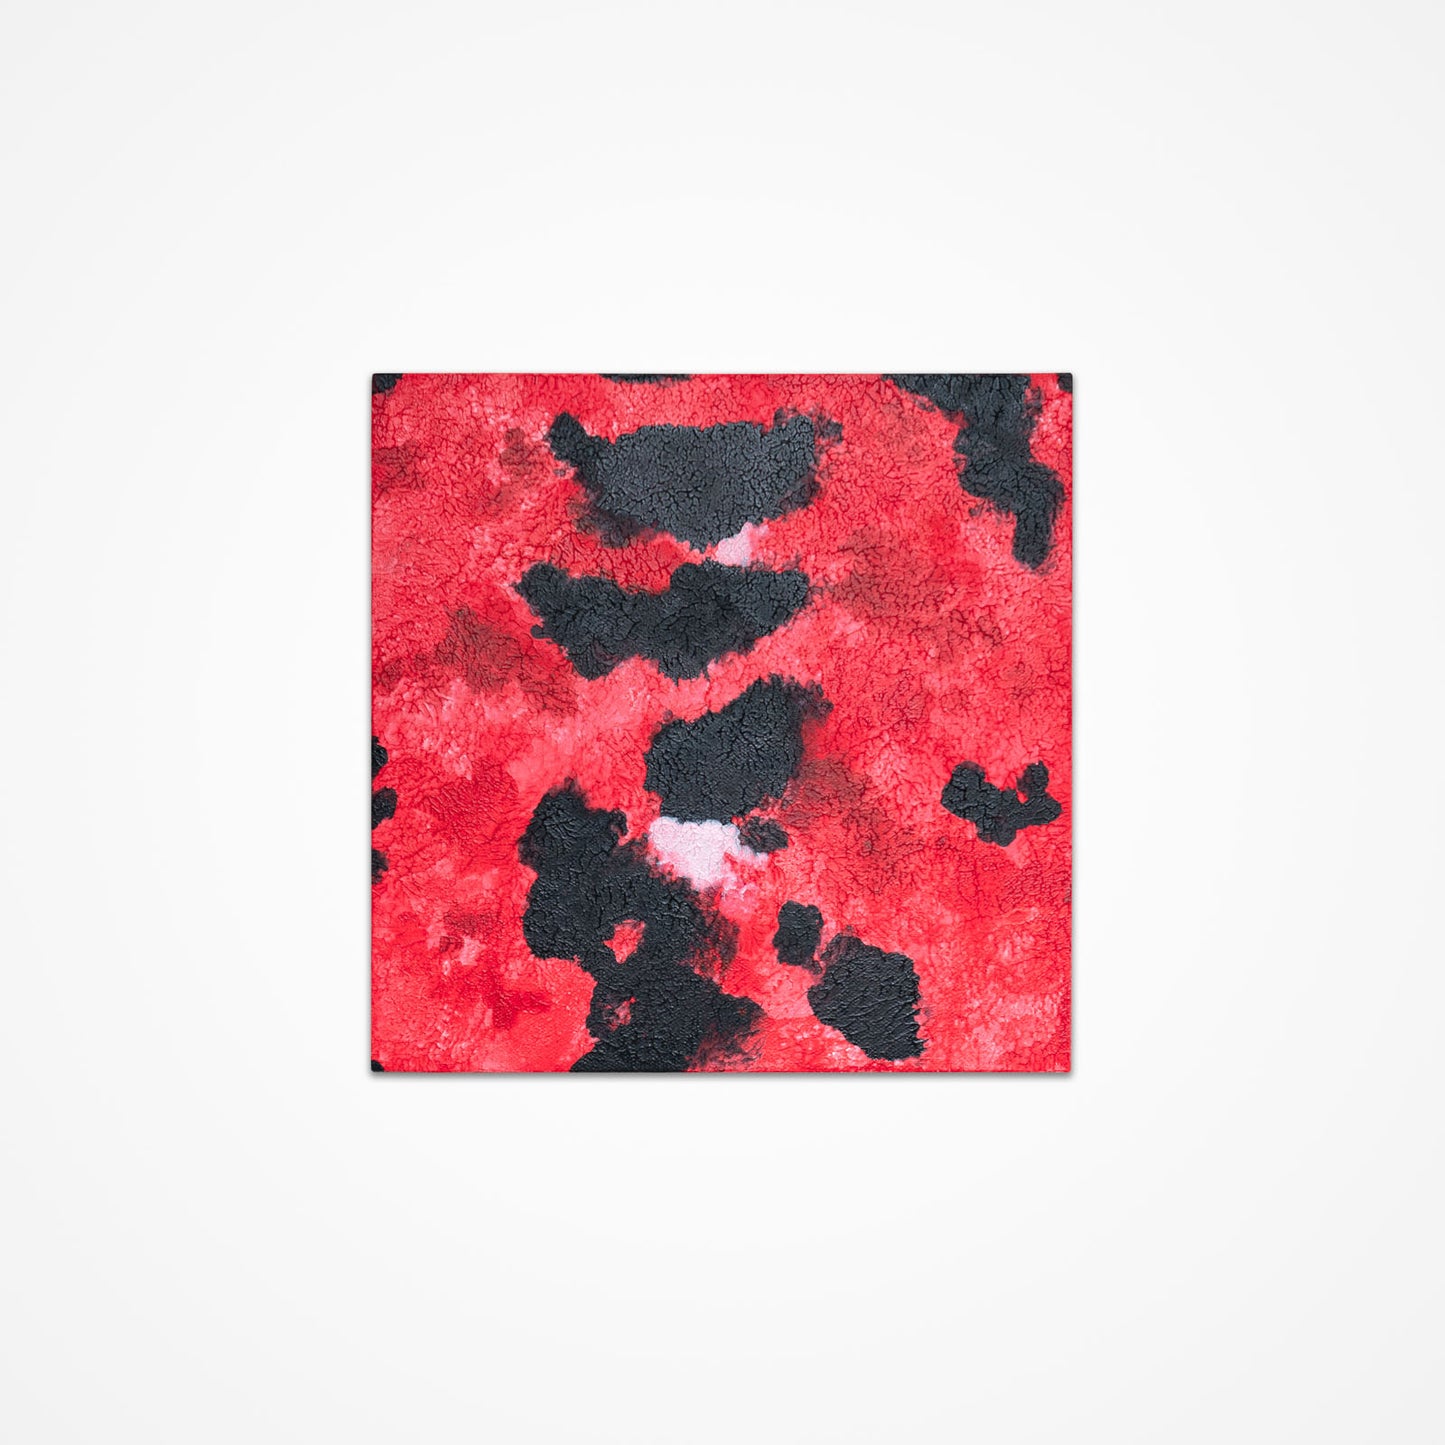 Koi Square 3/8 - Acrylic on Canvas